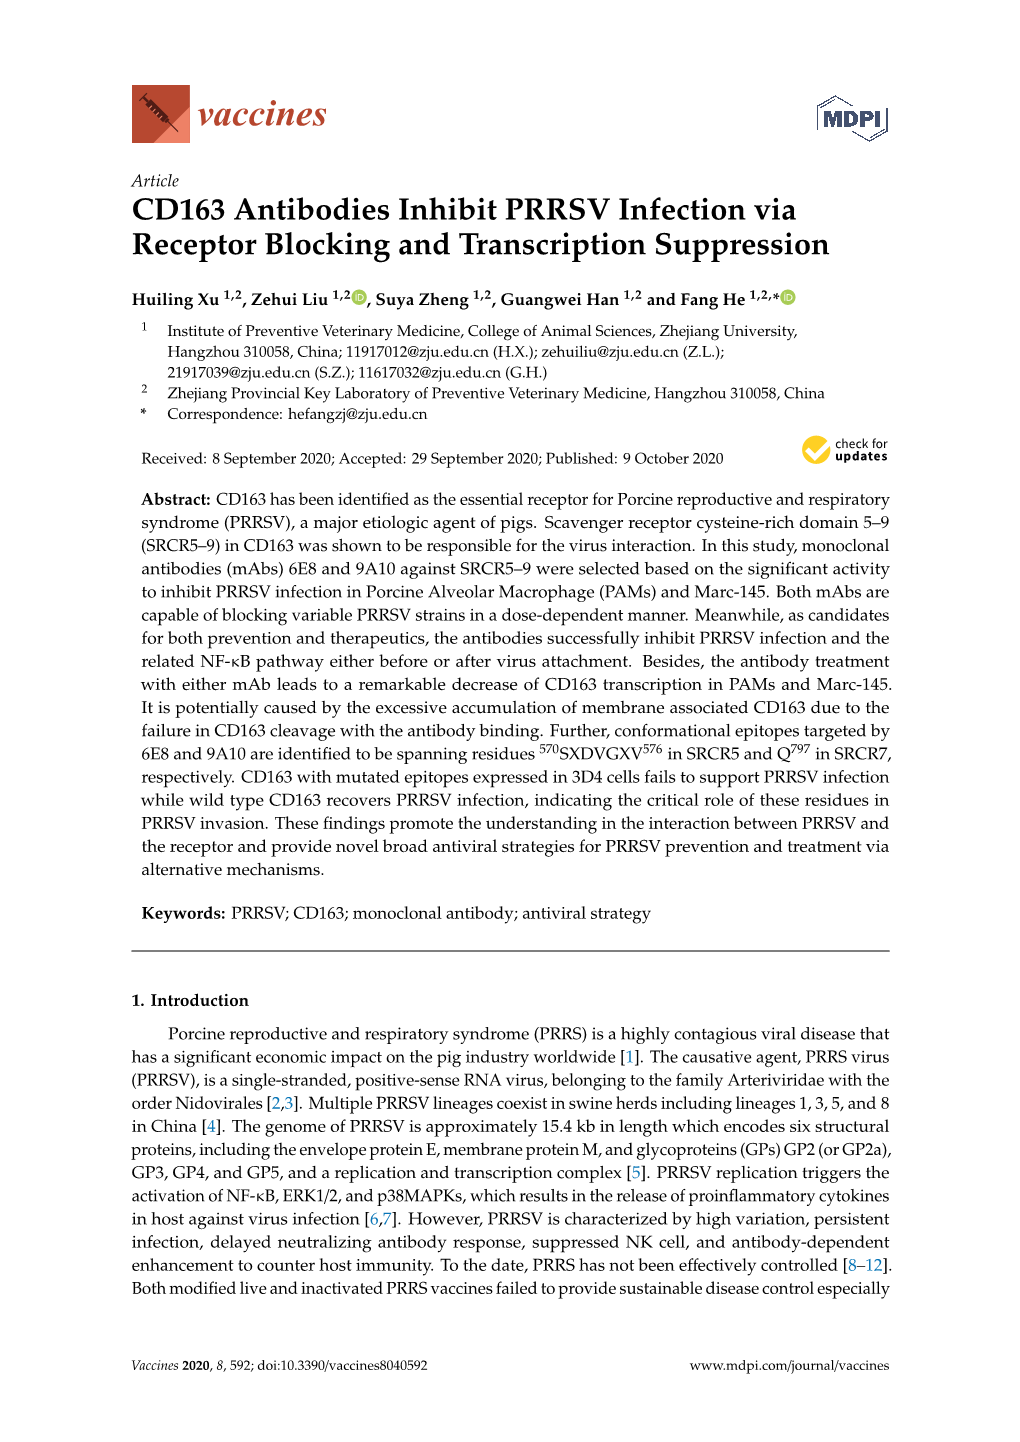 CD163 Antibodies Inhibit PRRSV Infection Via Receptor Blocking and Transcription Suppression